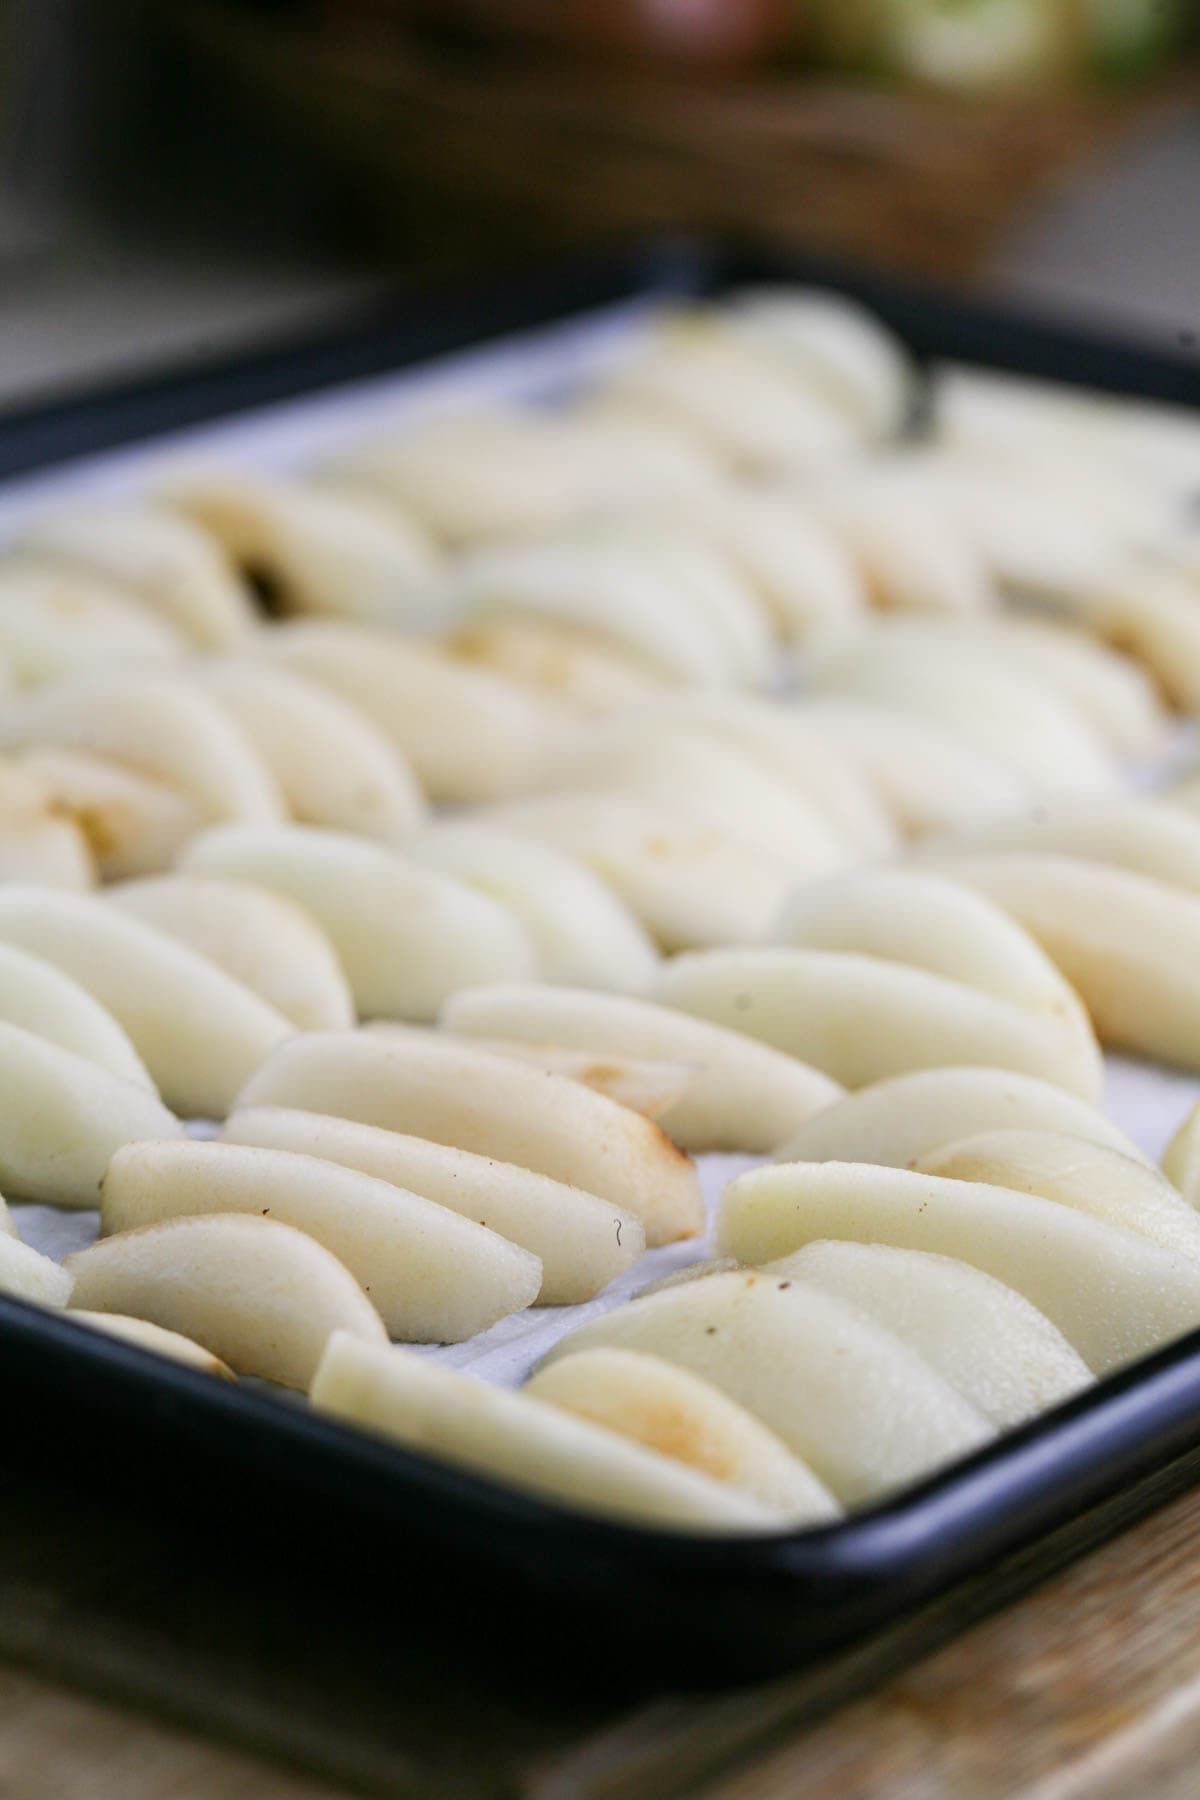 peeled pears set on a baking sheet before freezing